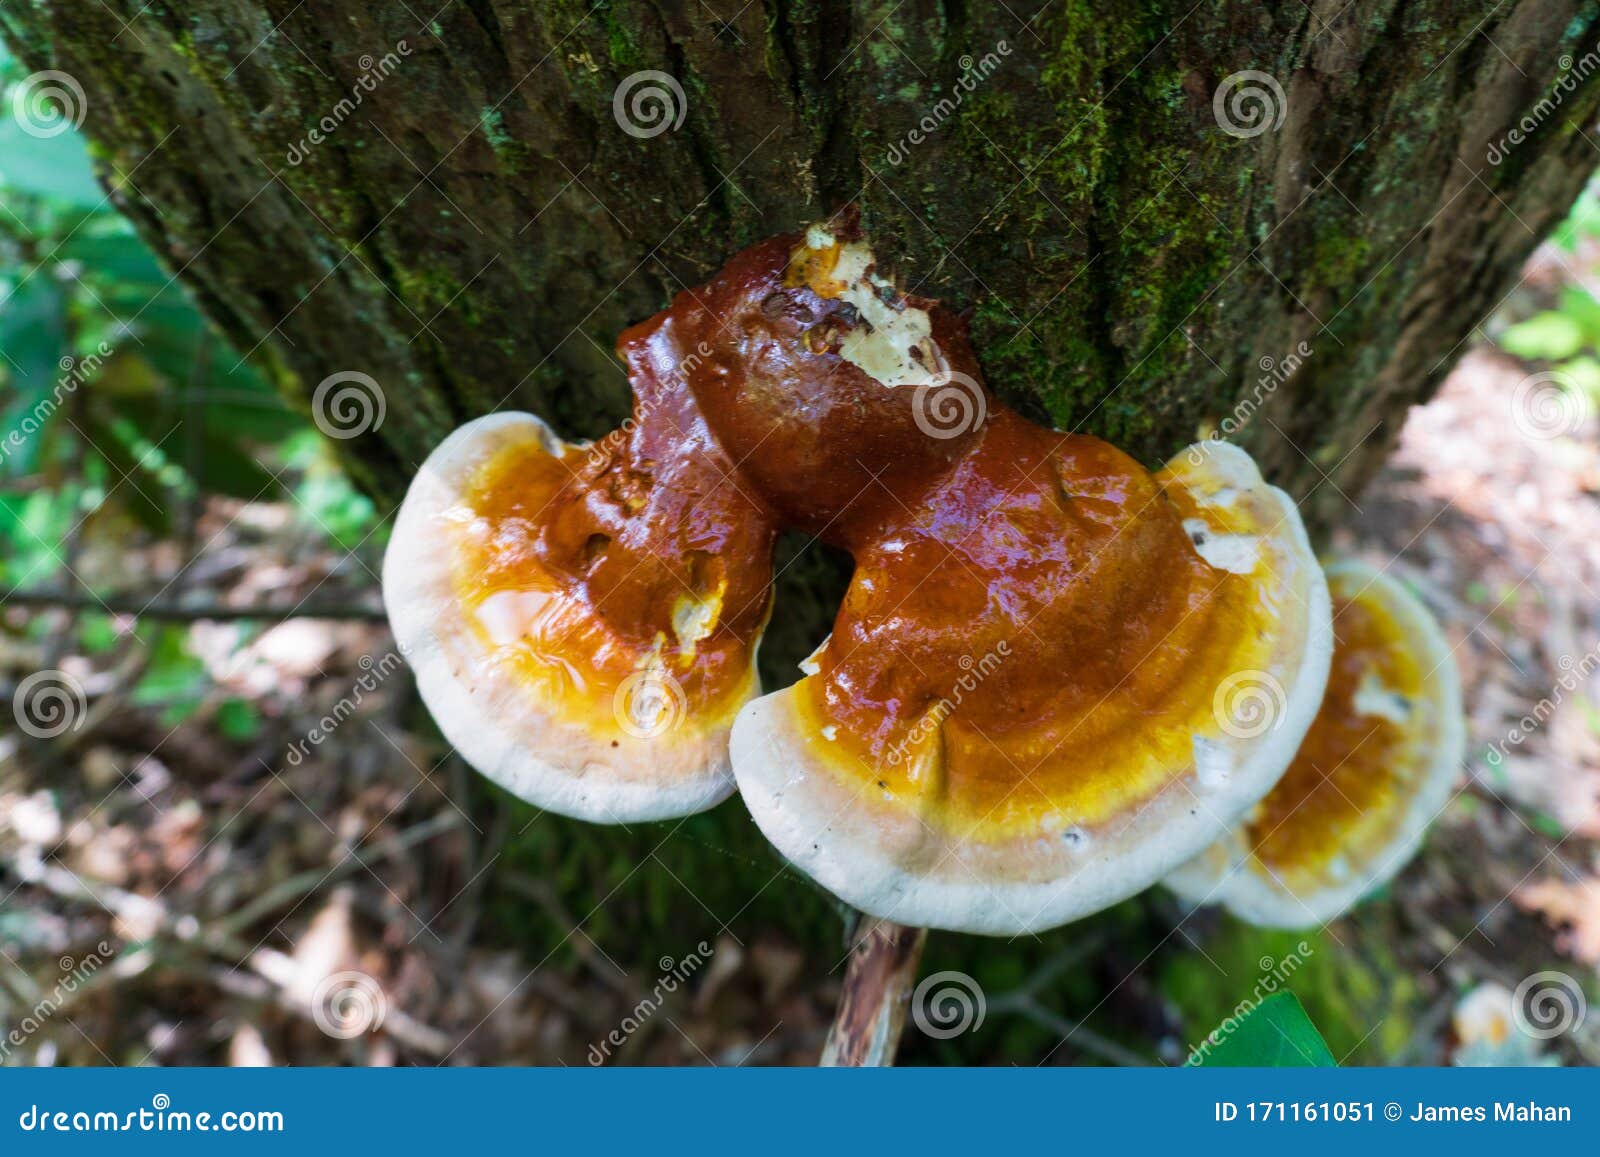 wild reishi mushroom  ganoderma tsugae  growing on a hemlock tree. this medicinal herb is known for its immune supporting proper